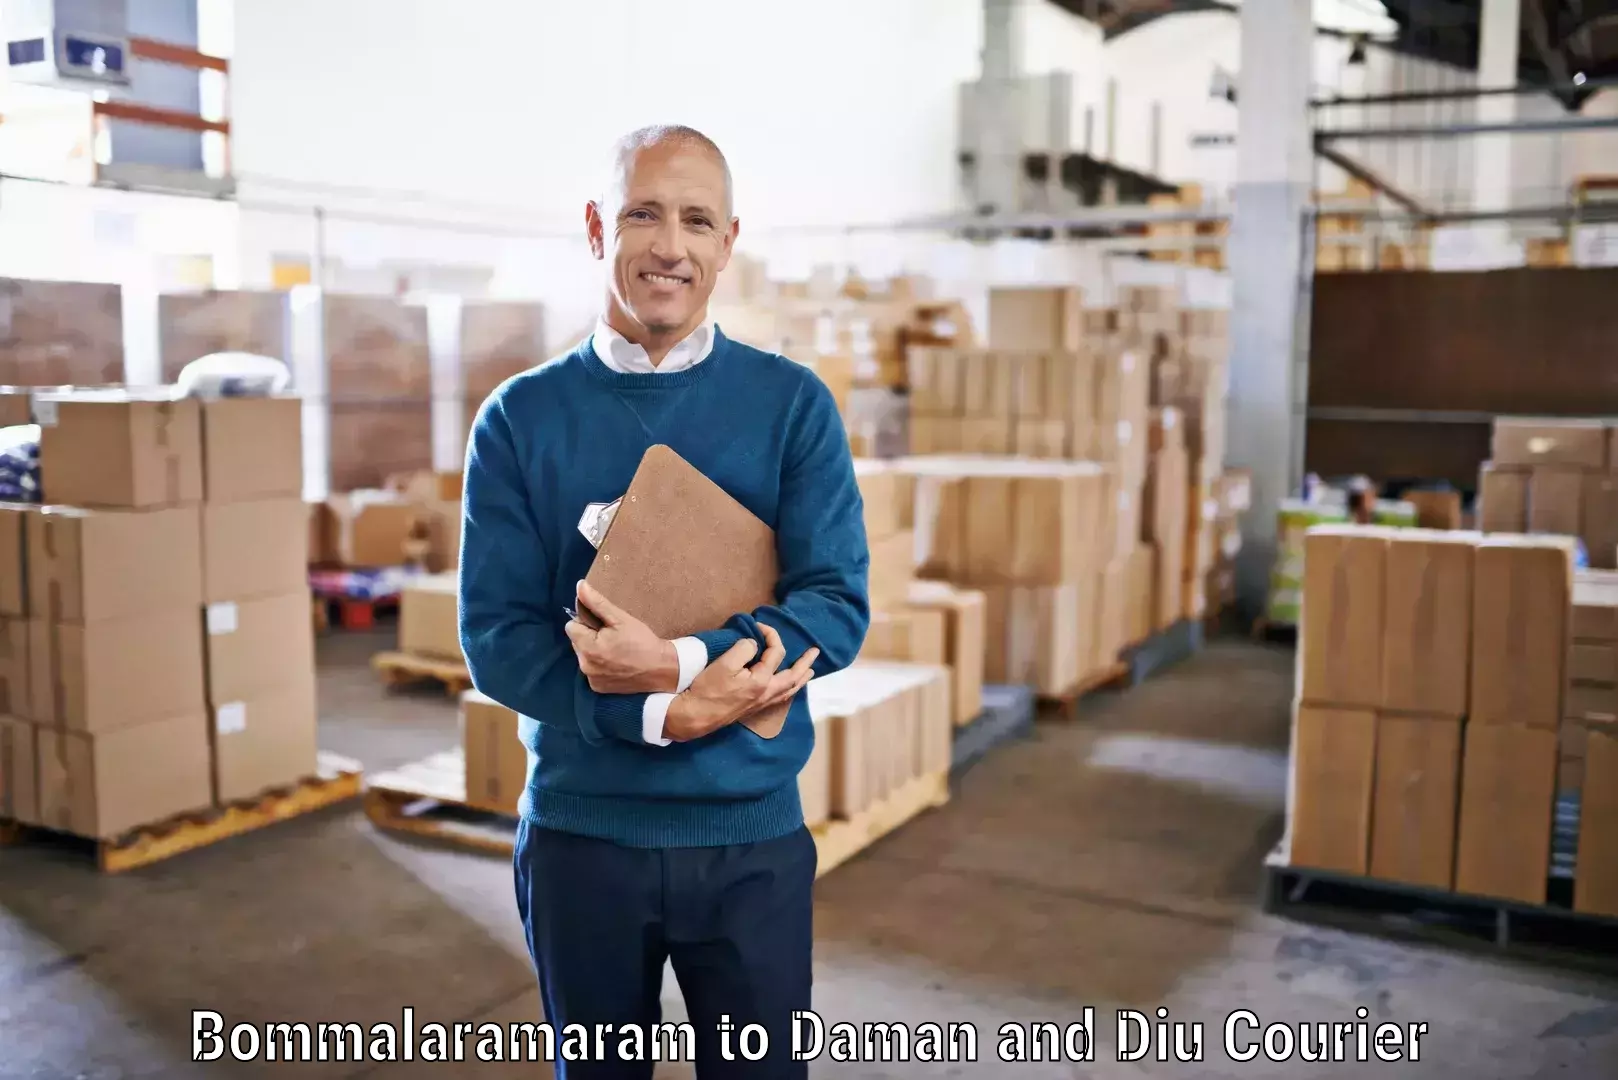 Courier service innovation Bommalaramaram to Daman